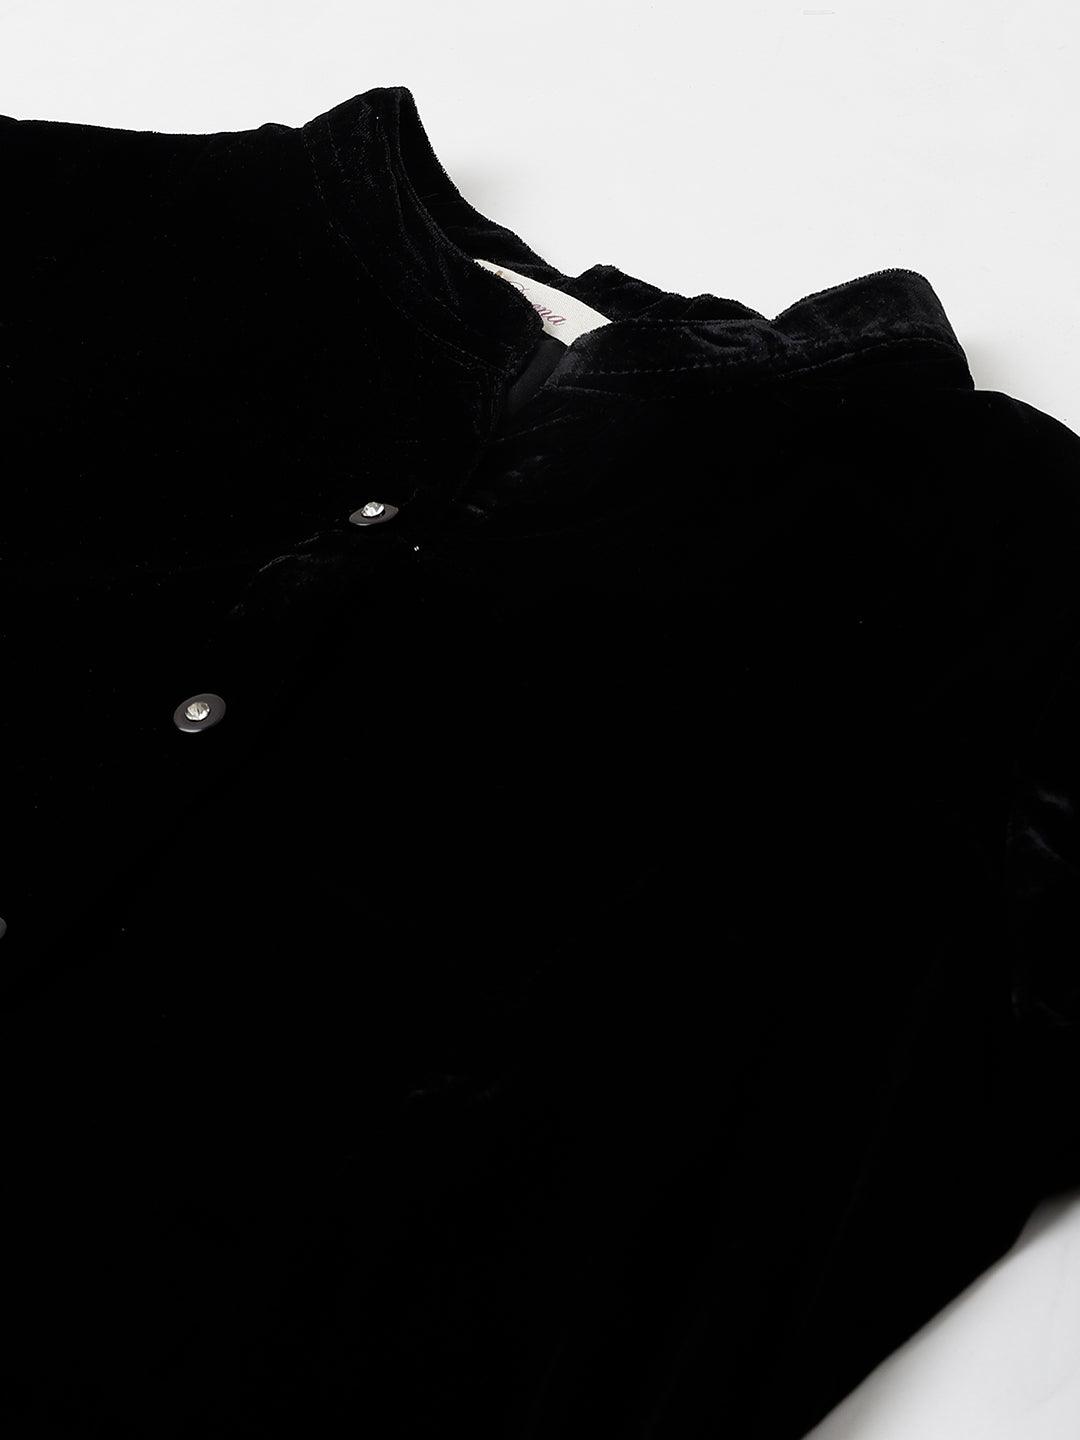 Divena Black Solid Velvet A-line Shirts Style Top - divena world